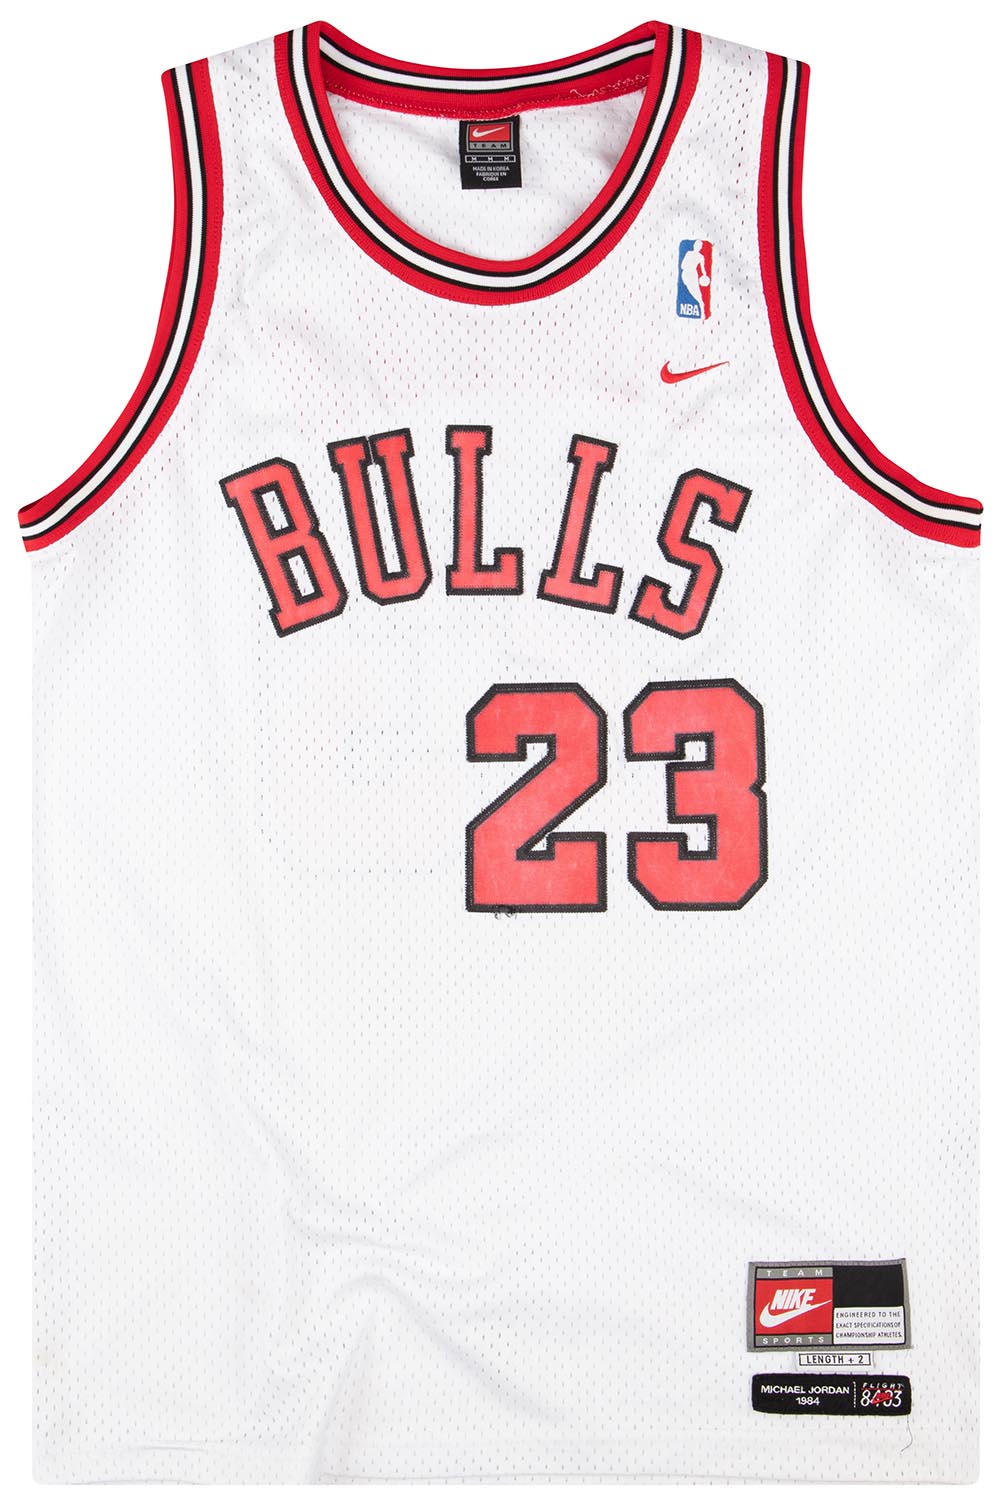 2004 Nike Michael Jordan Chicago Bulls Flight 8403 PE Rookie